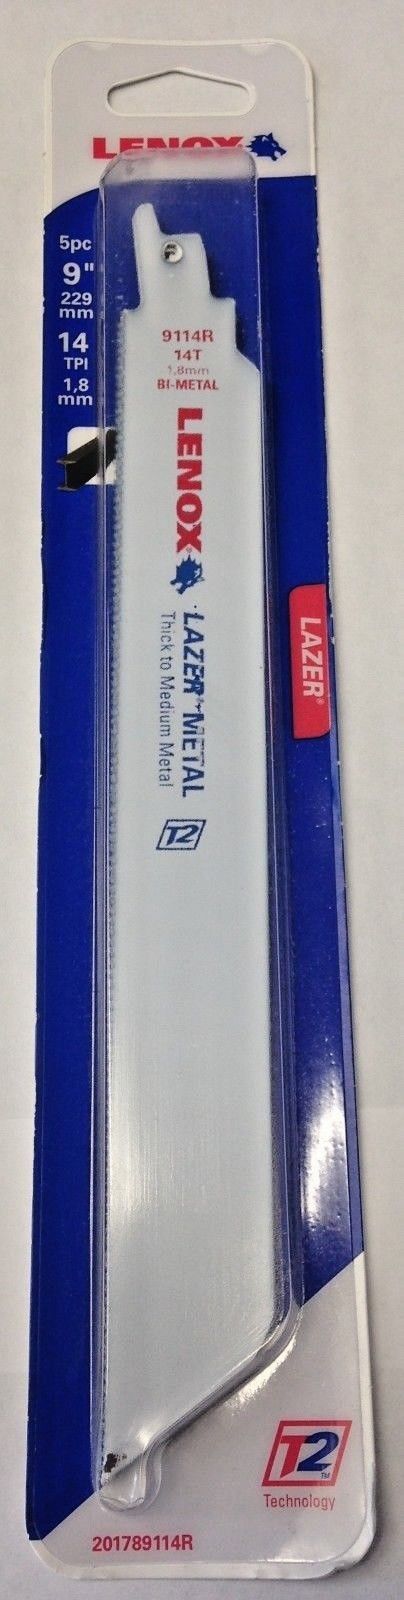 Lenox 201789114R 9" x 14 TPI Lazer Metal Reciprocating Saw Blades 5 Pack USA